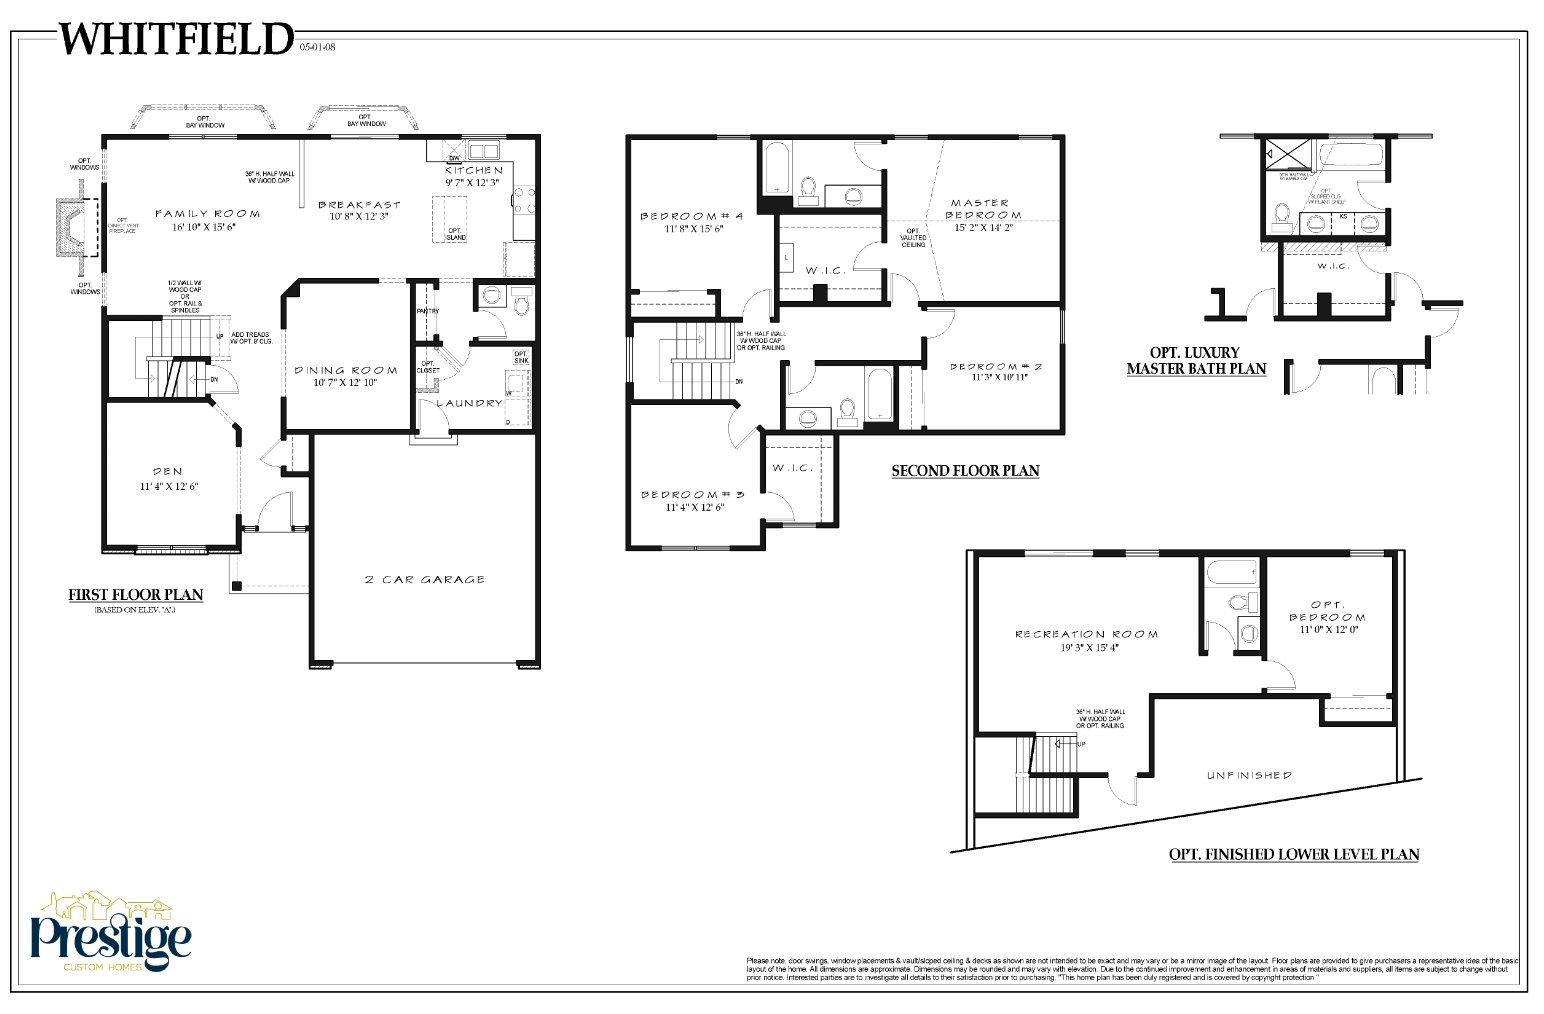 whitfield-floor-plan-prestige-custom-homes-2023